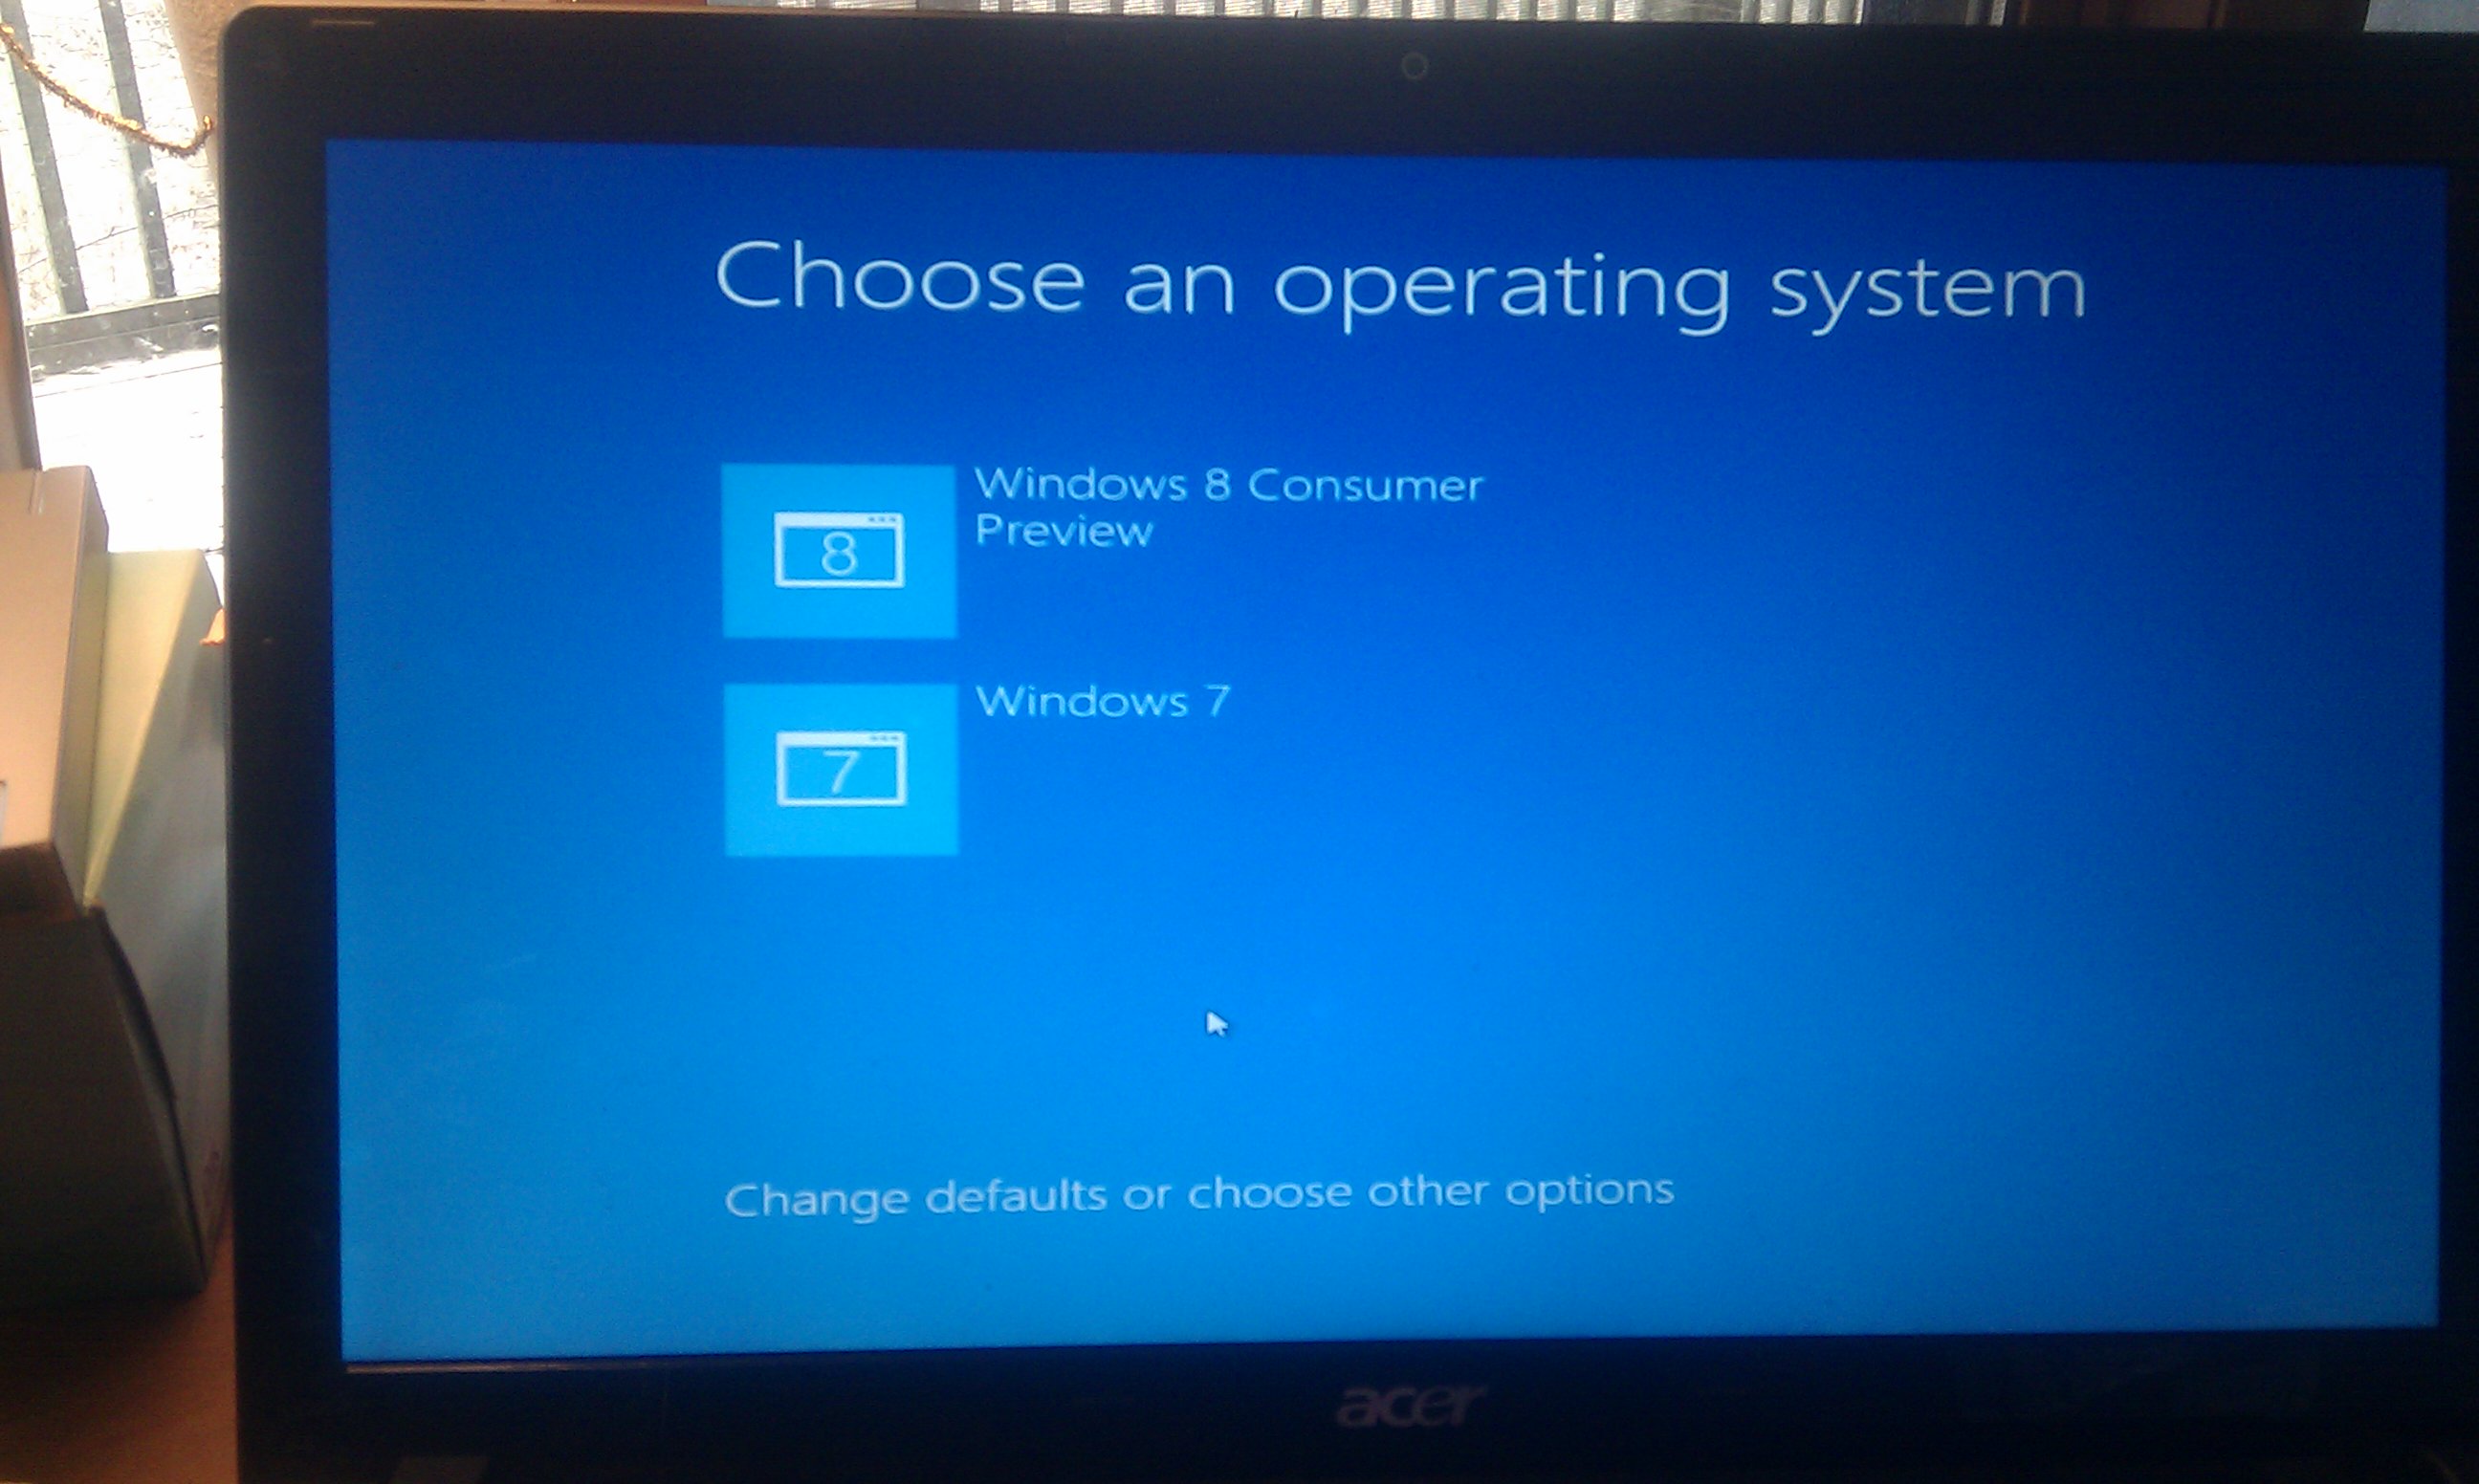 Windows 8 CP installation experience